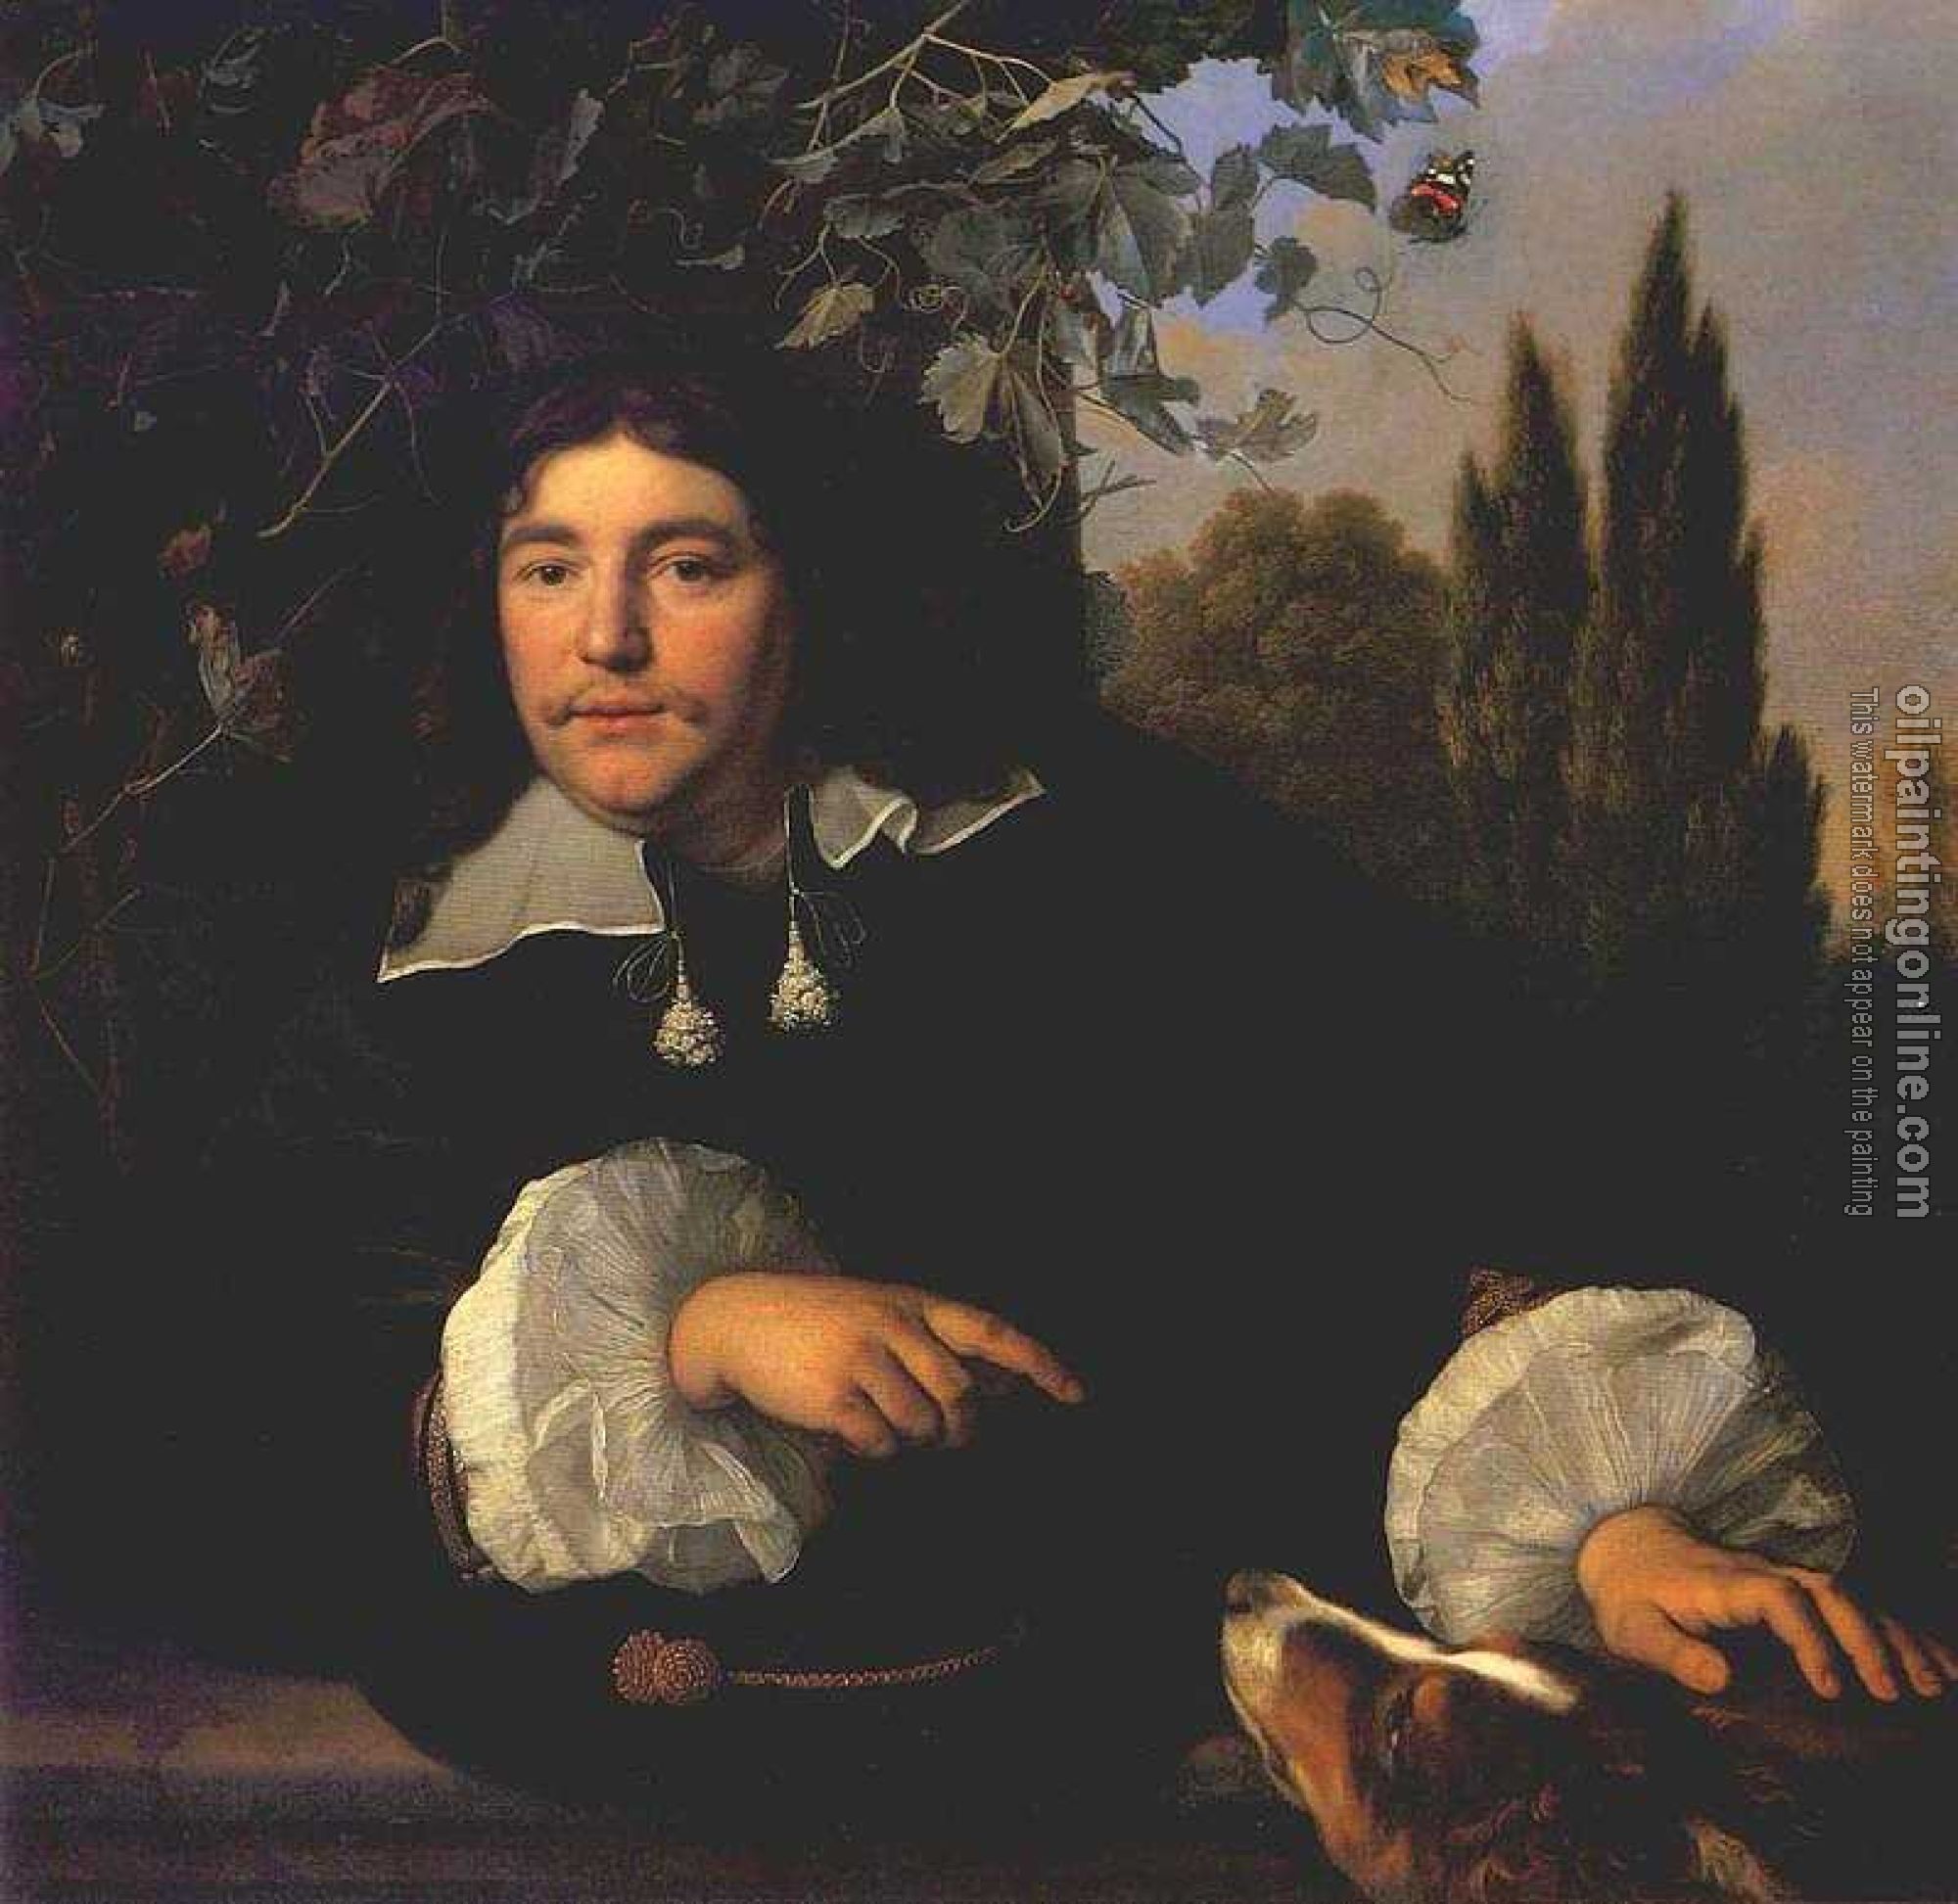 Helst, Bartholomeus van der - Self-portrait